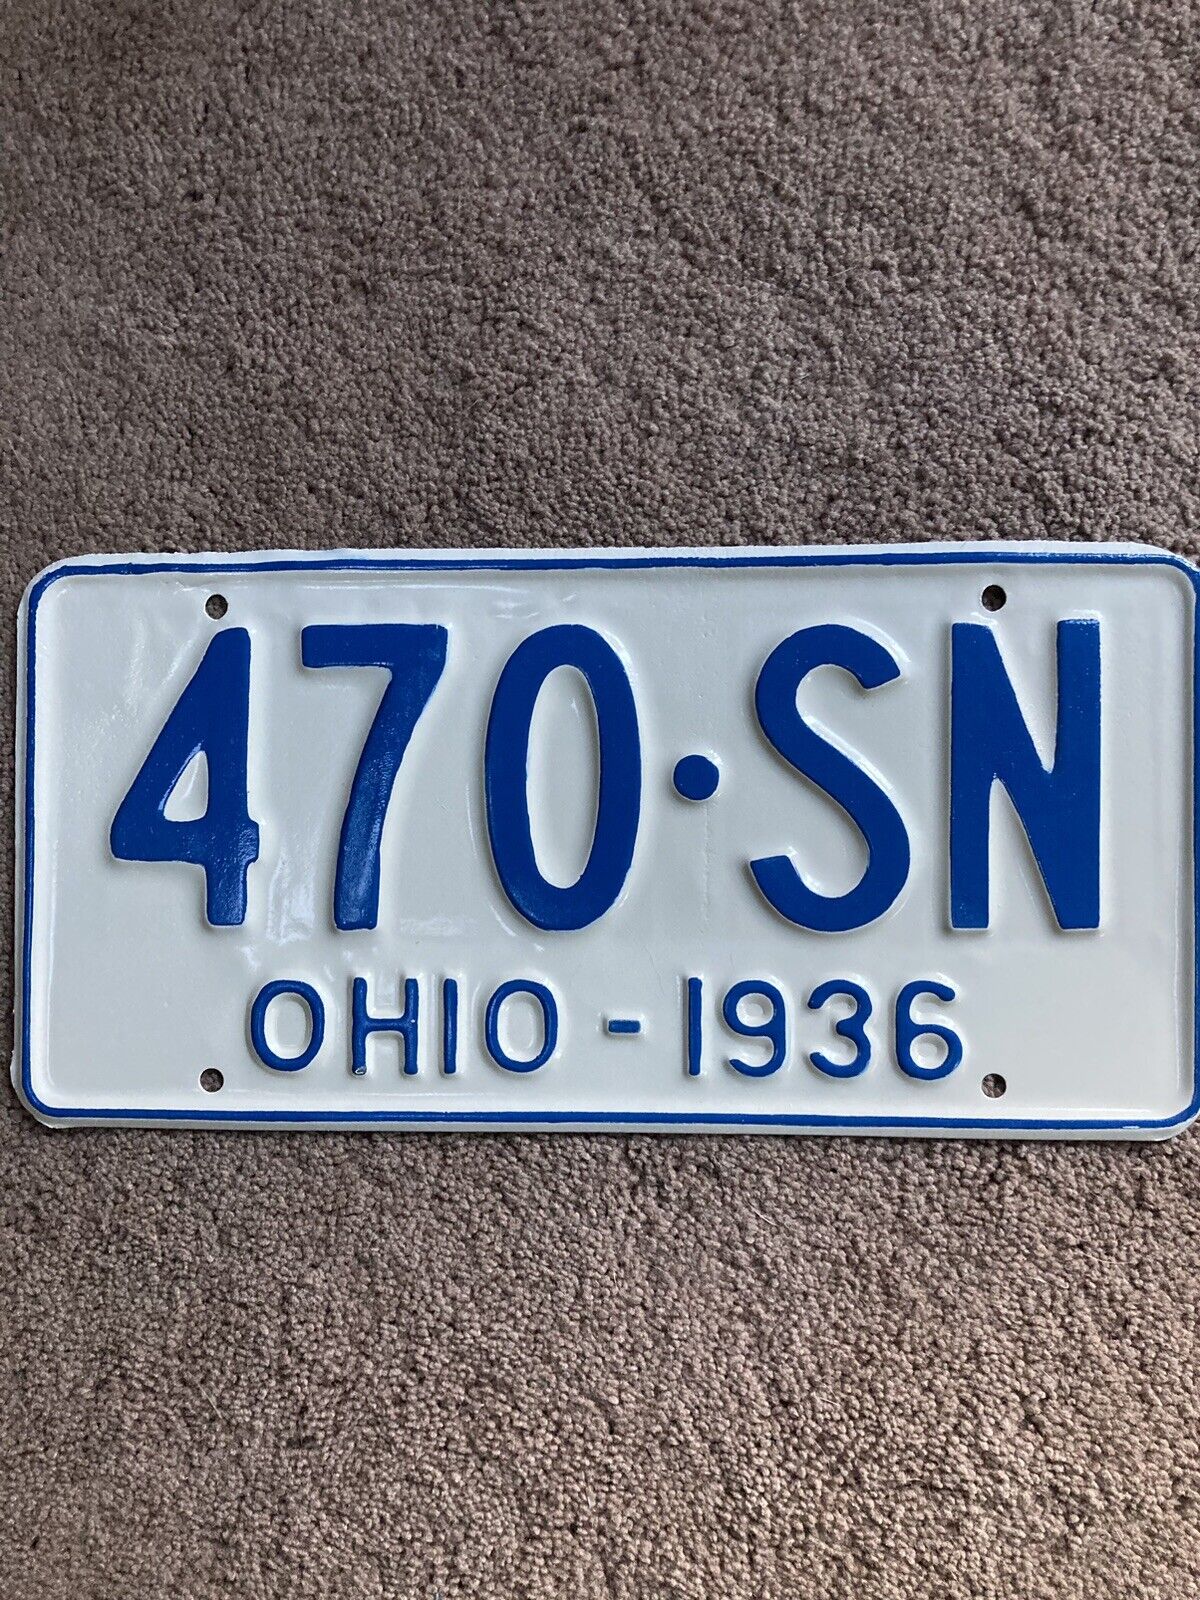 1936 Ohio License Plate -  470 SN - Very Nice